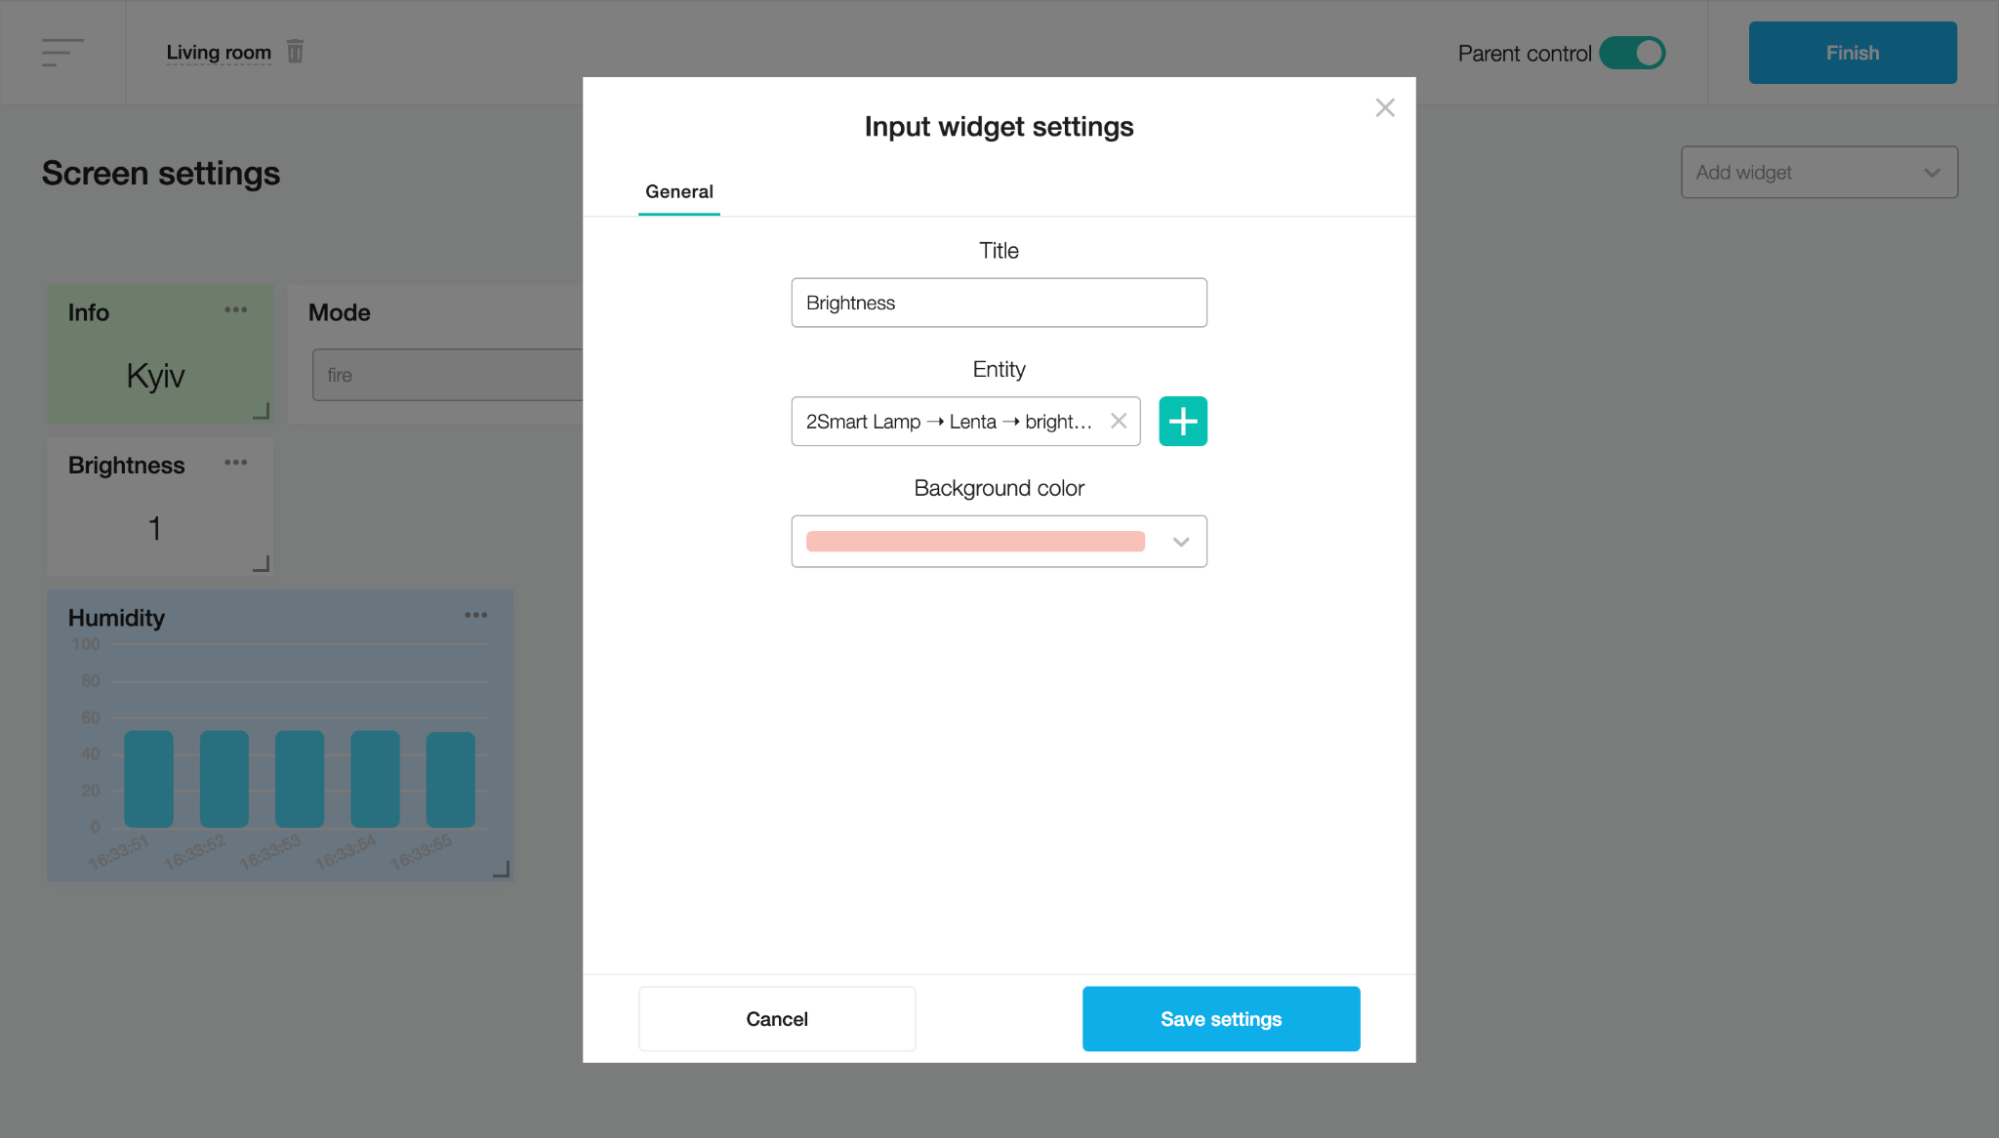 Input widget settings